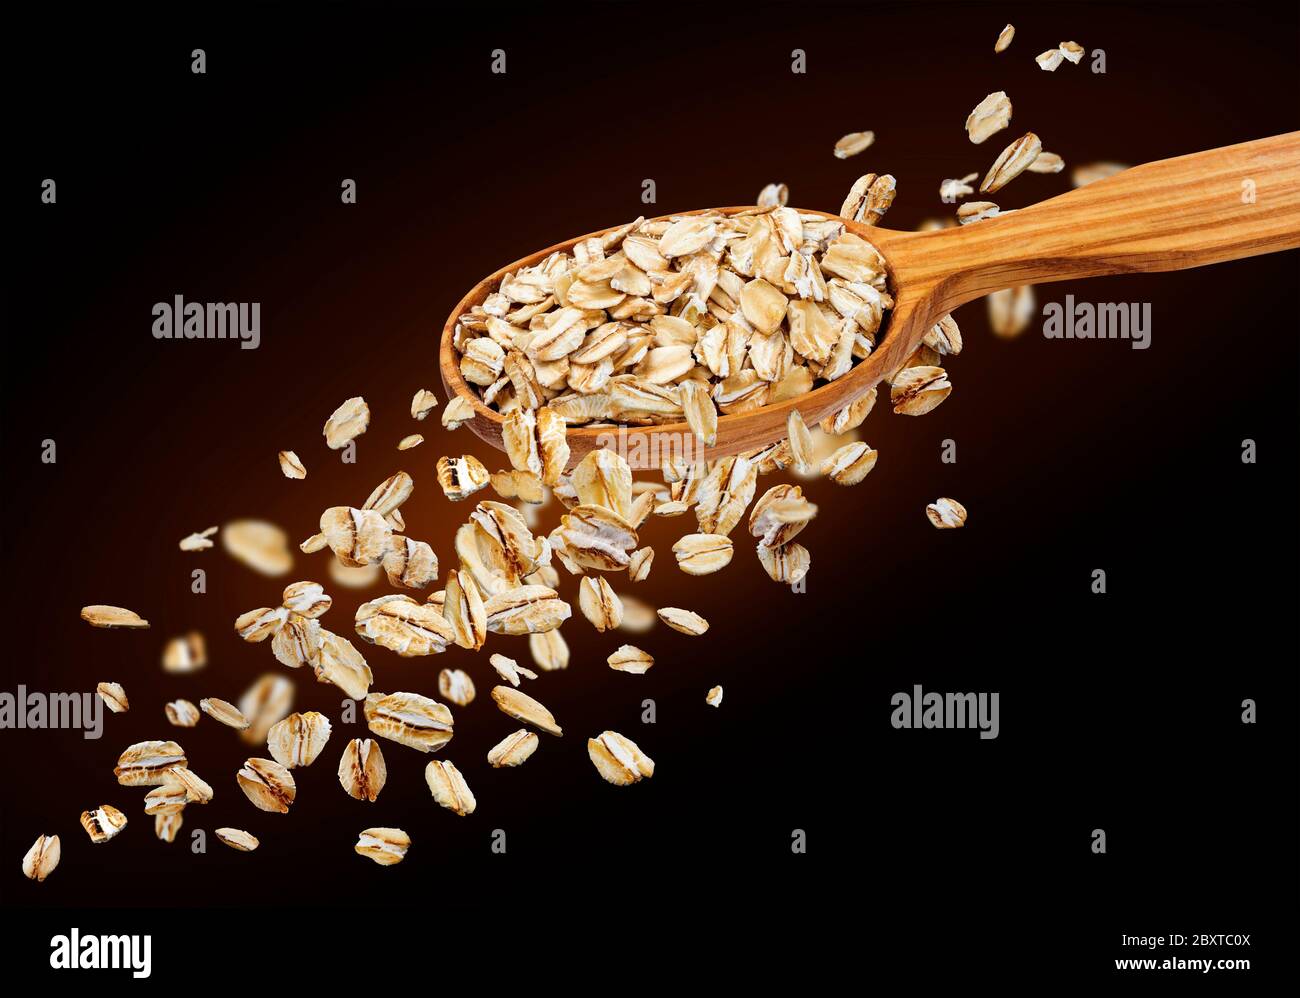 Falling oat flakes isolated on black background Stock Photo